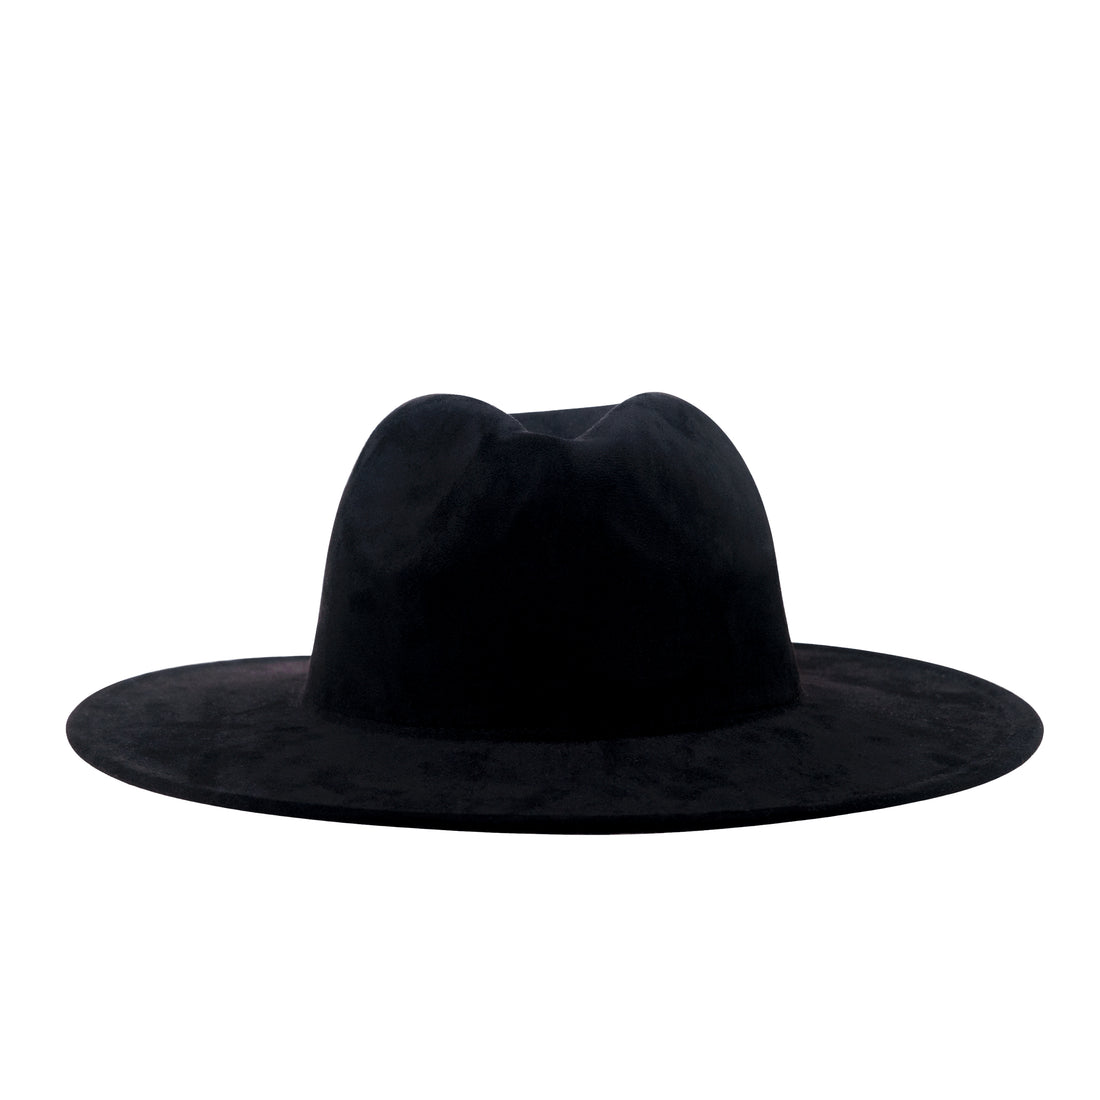 Colonel Black / Fedora Rancher hat